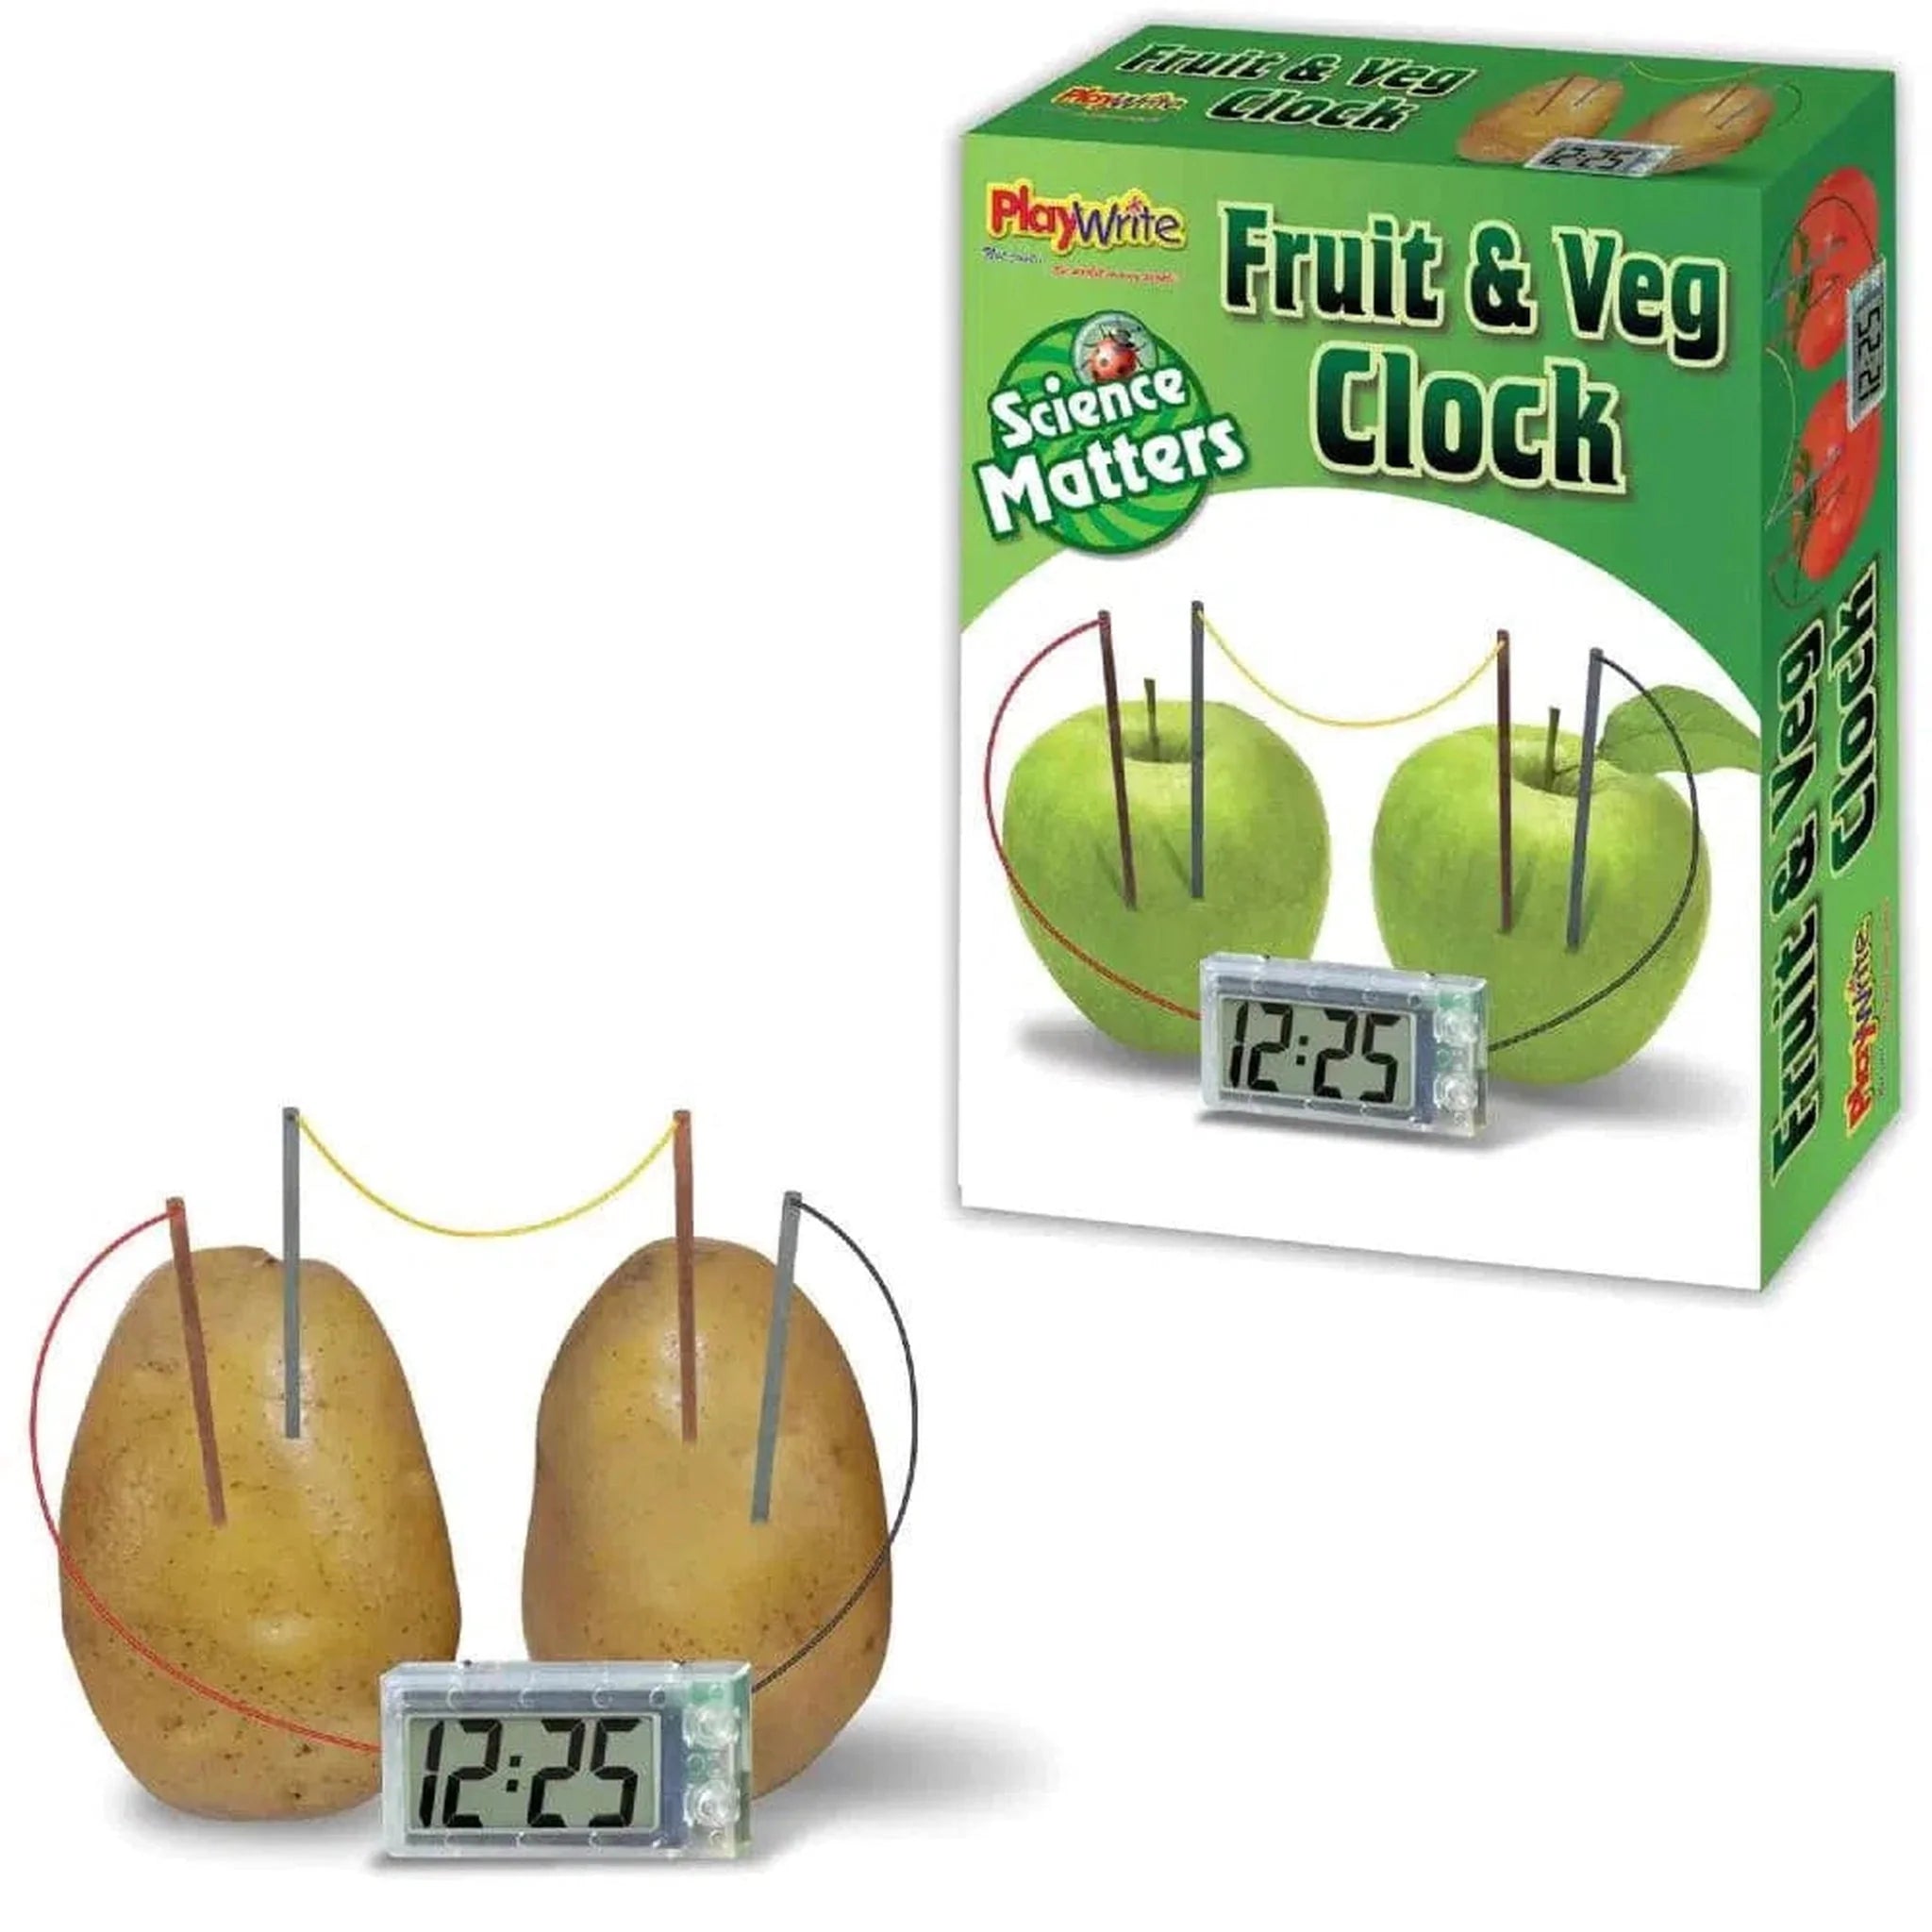 Fruit & Veg Clock Science Kit 22x17cm - Kids Party Craft